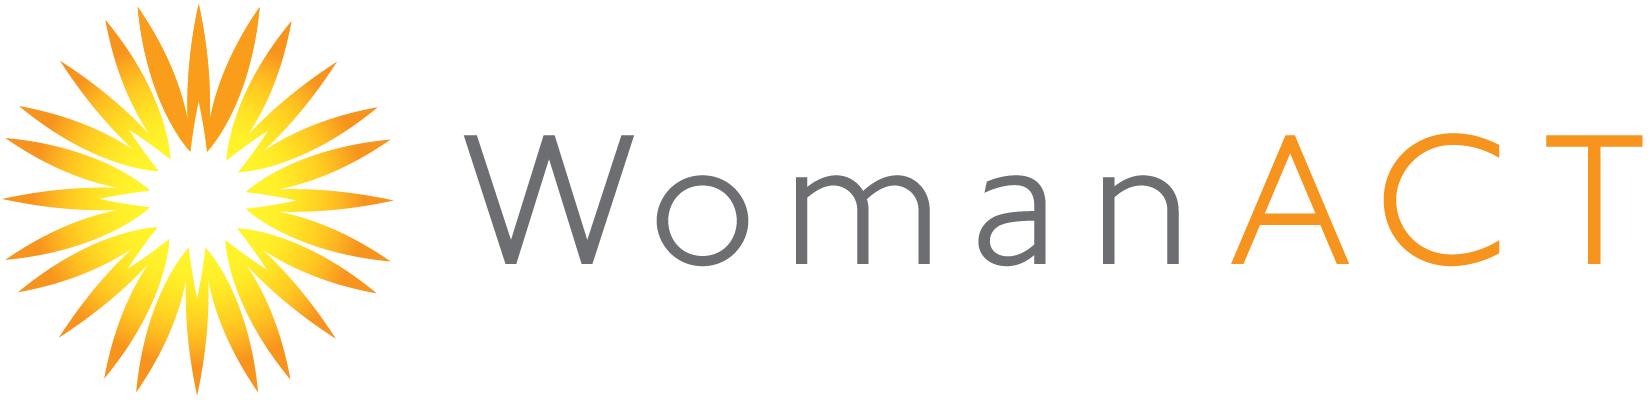 Woman Act Logo, Return to home